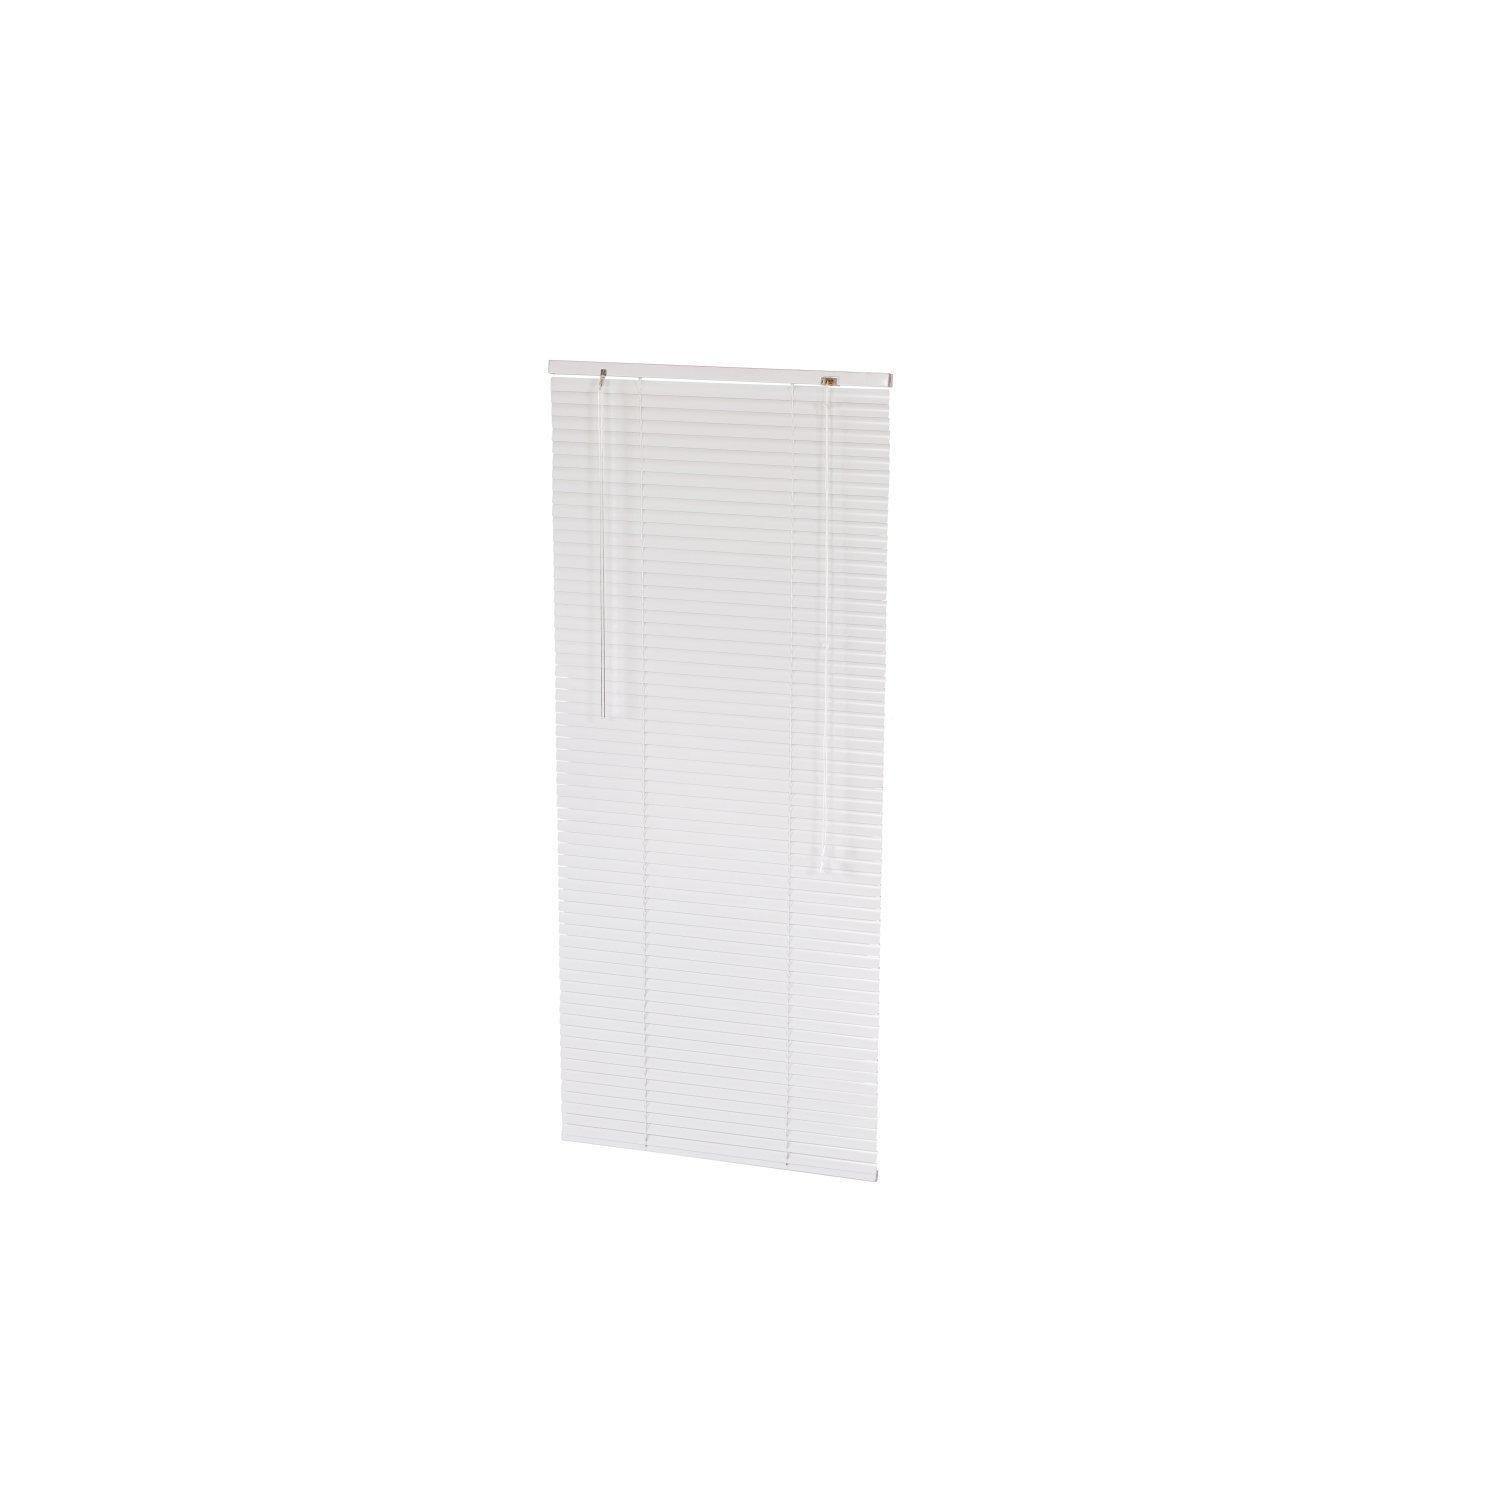 Aluminium White Venetian Window Blinds with Fixings - image 1